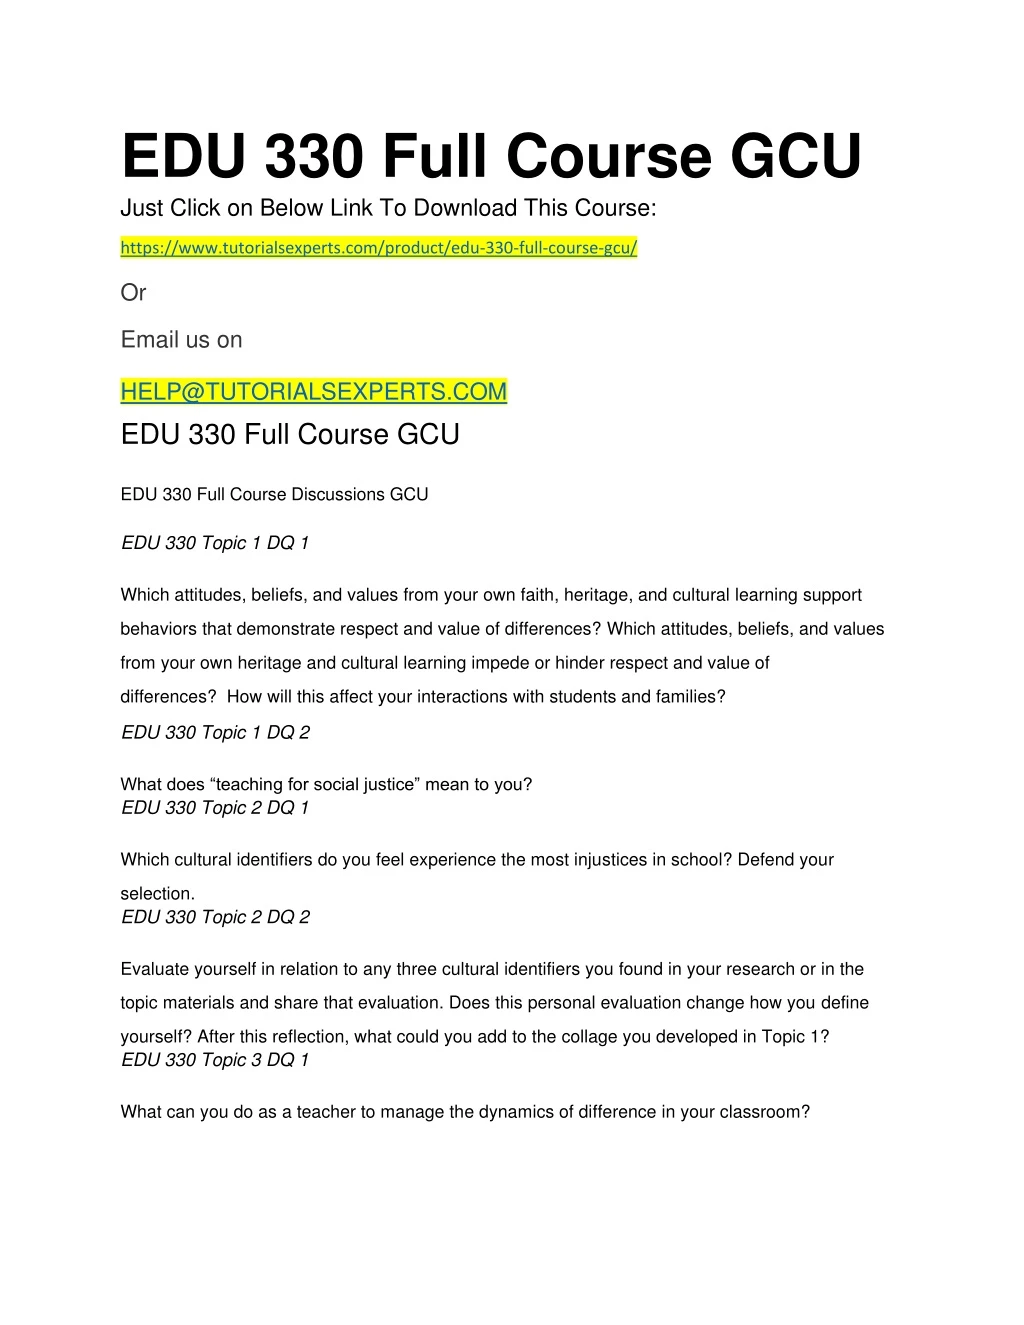 edu 330 full course gcu just click on below link